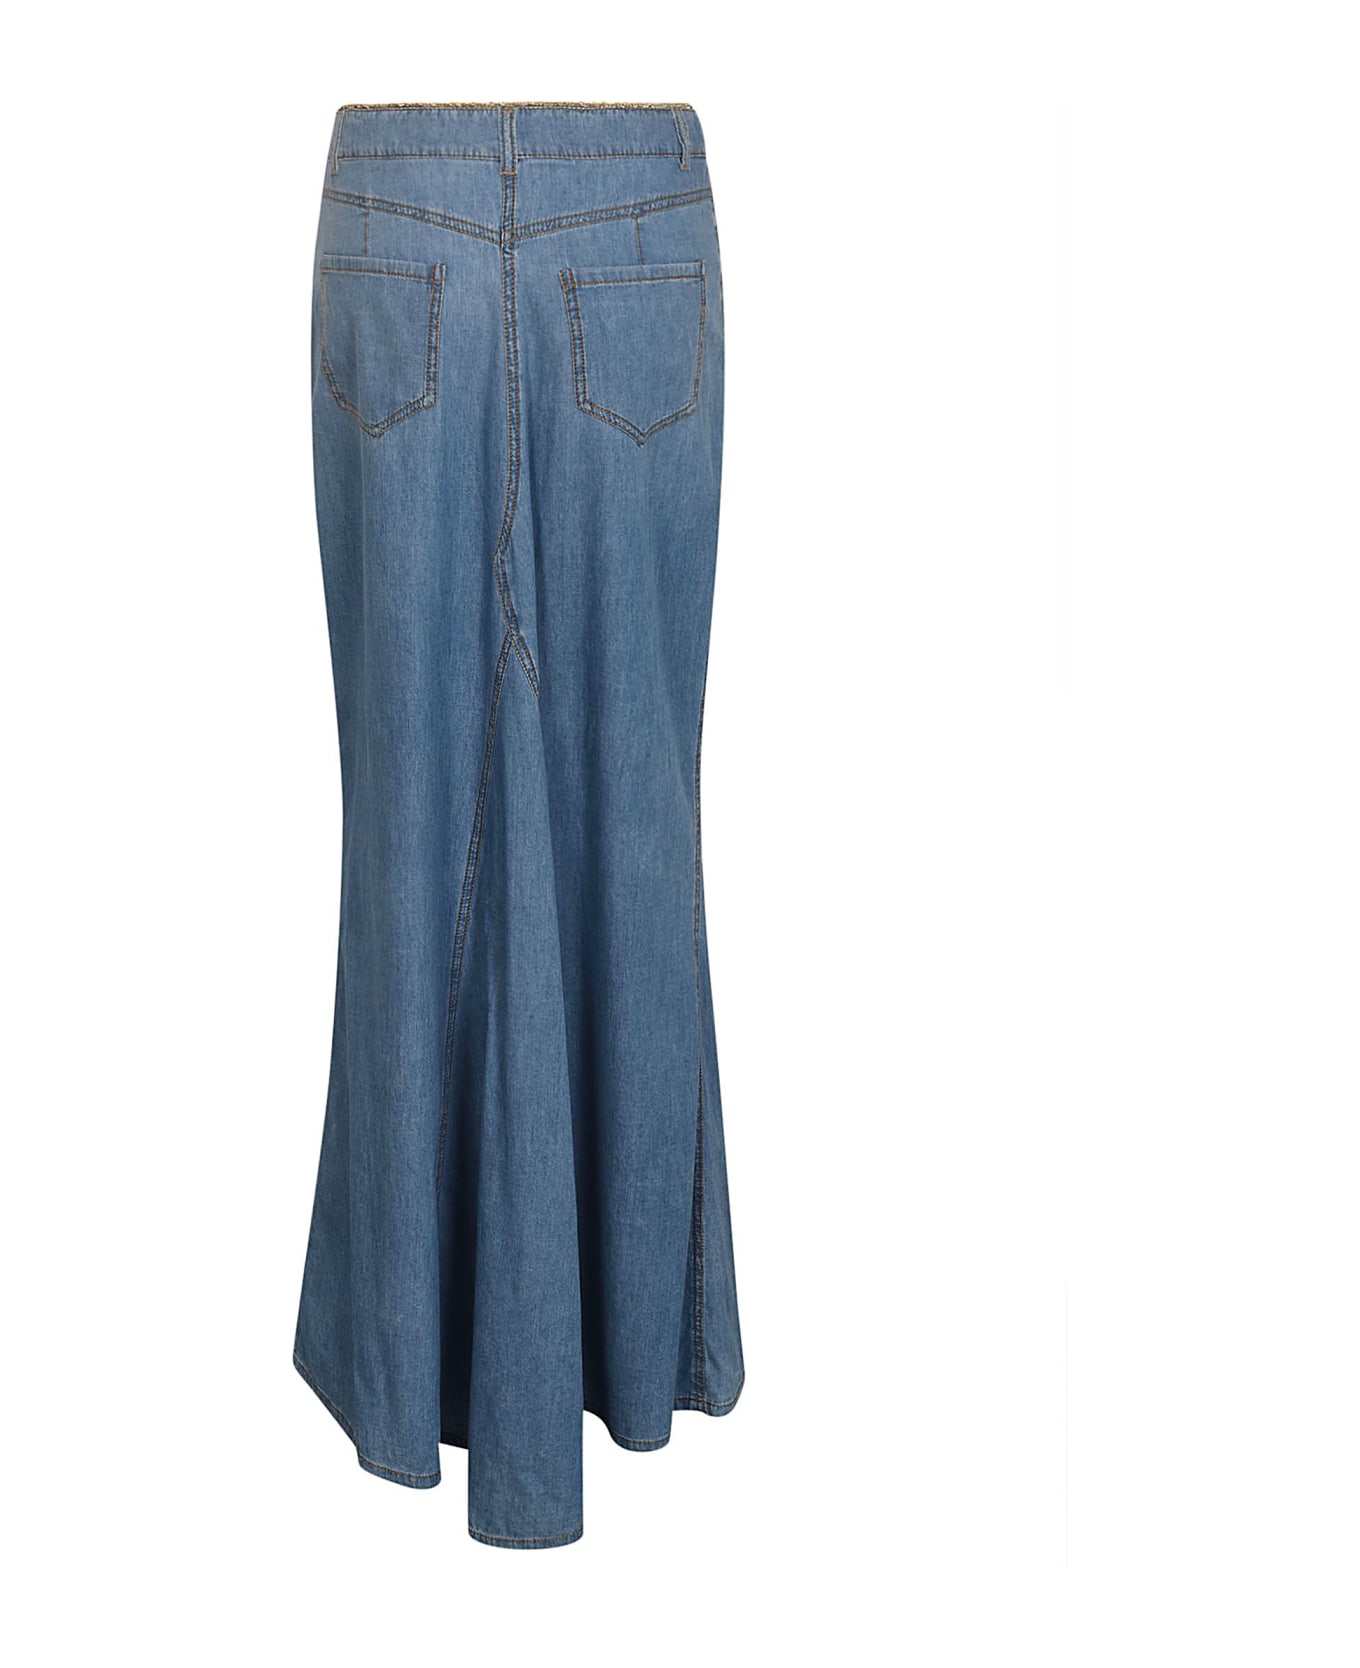 Ermanno Scervino Denim Long Skirt - Bright Cobalt スカート